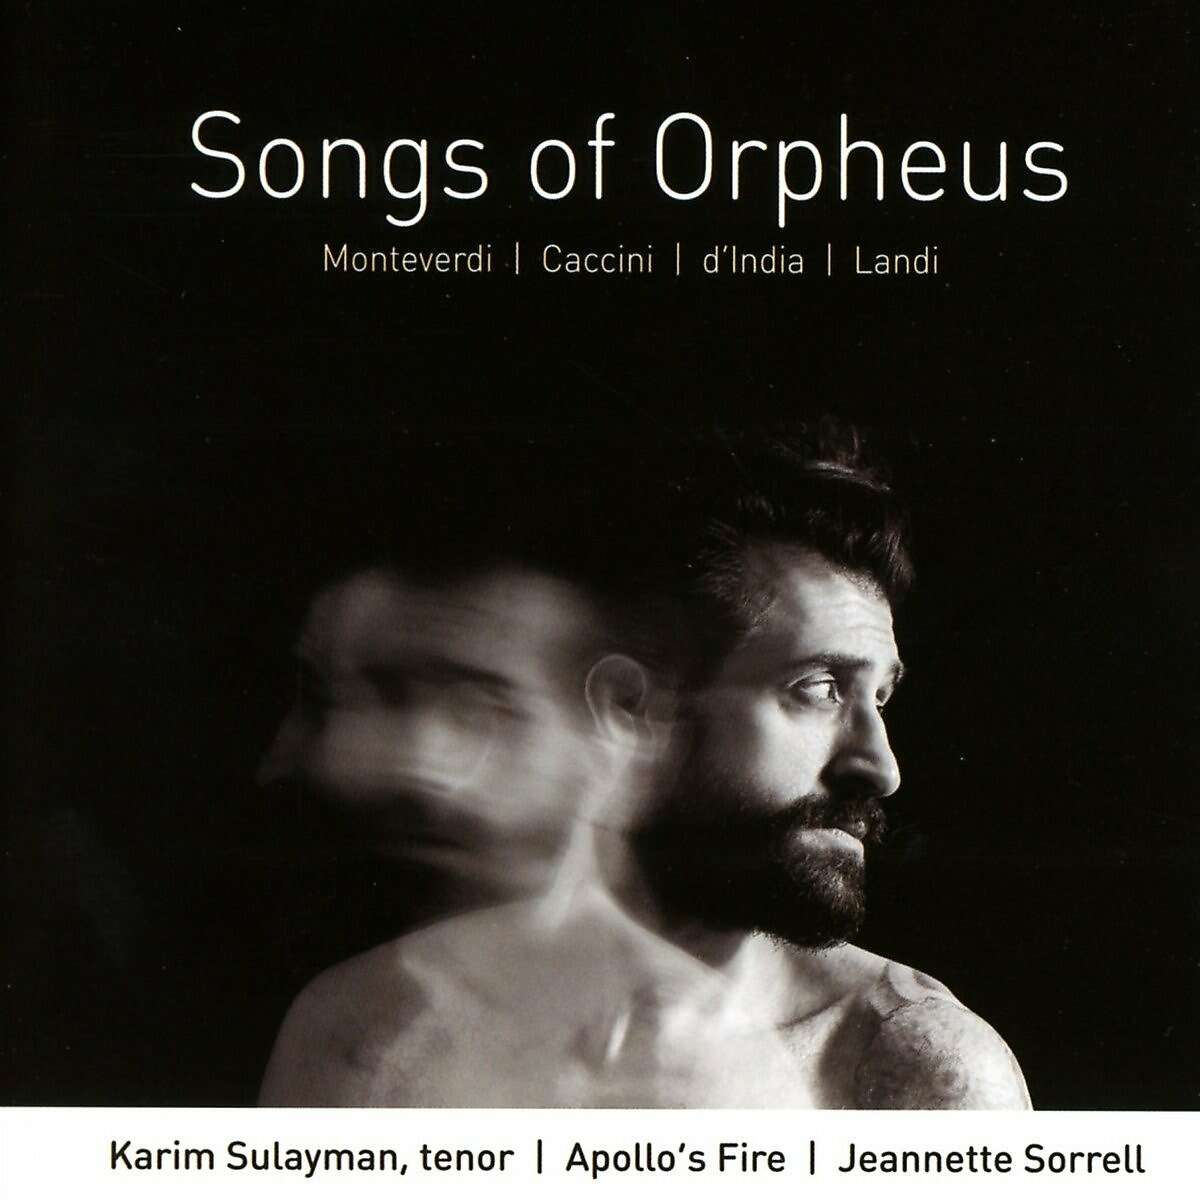 Apollo's Fire, "Songs of Orpheus"